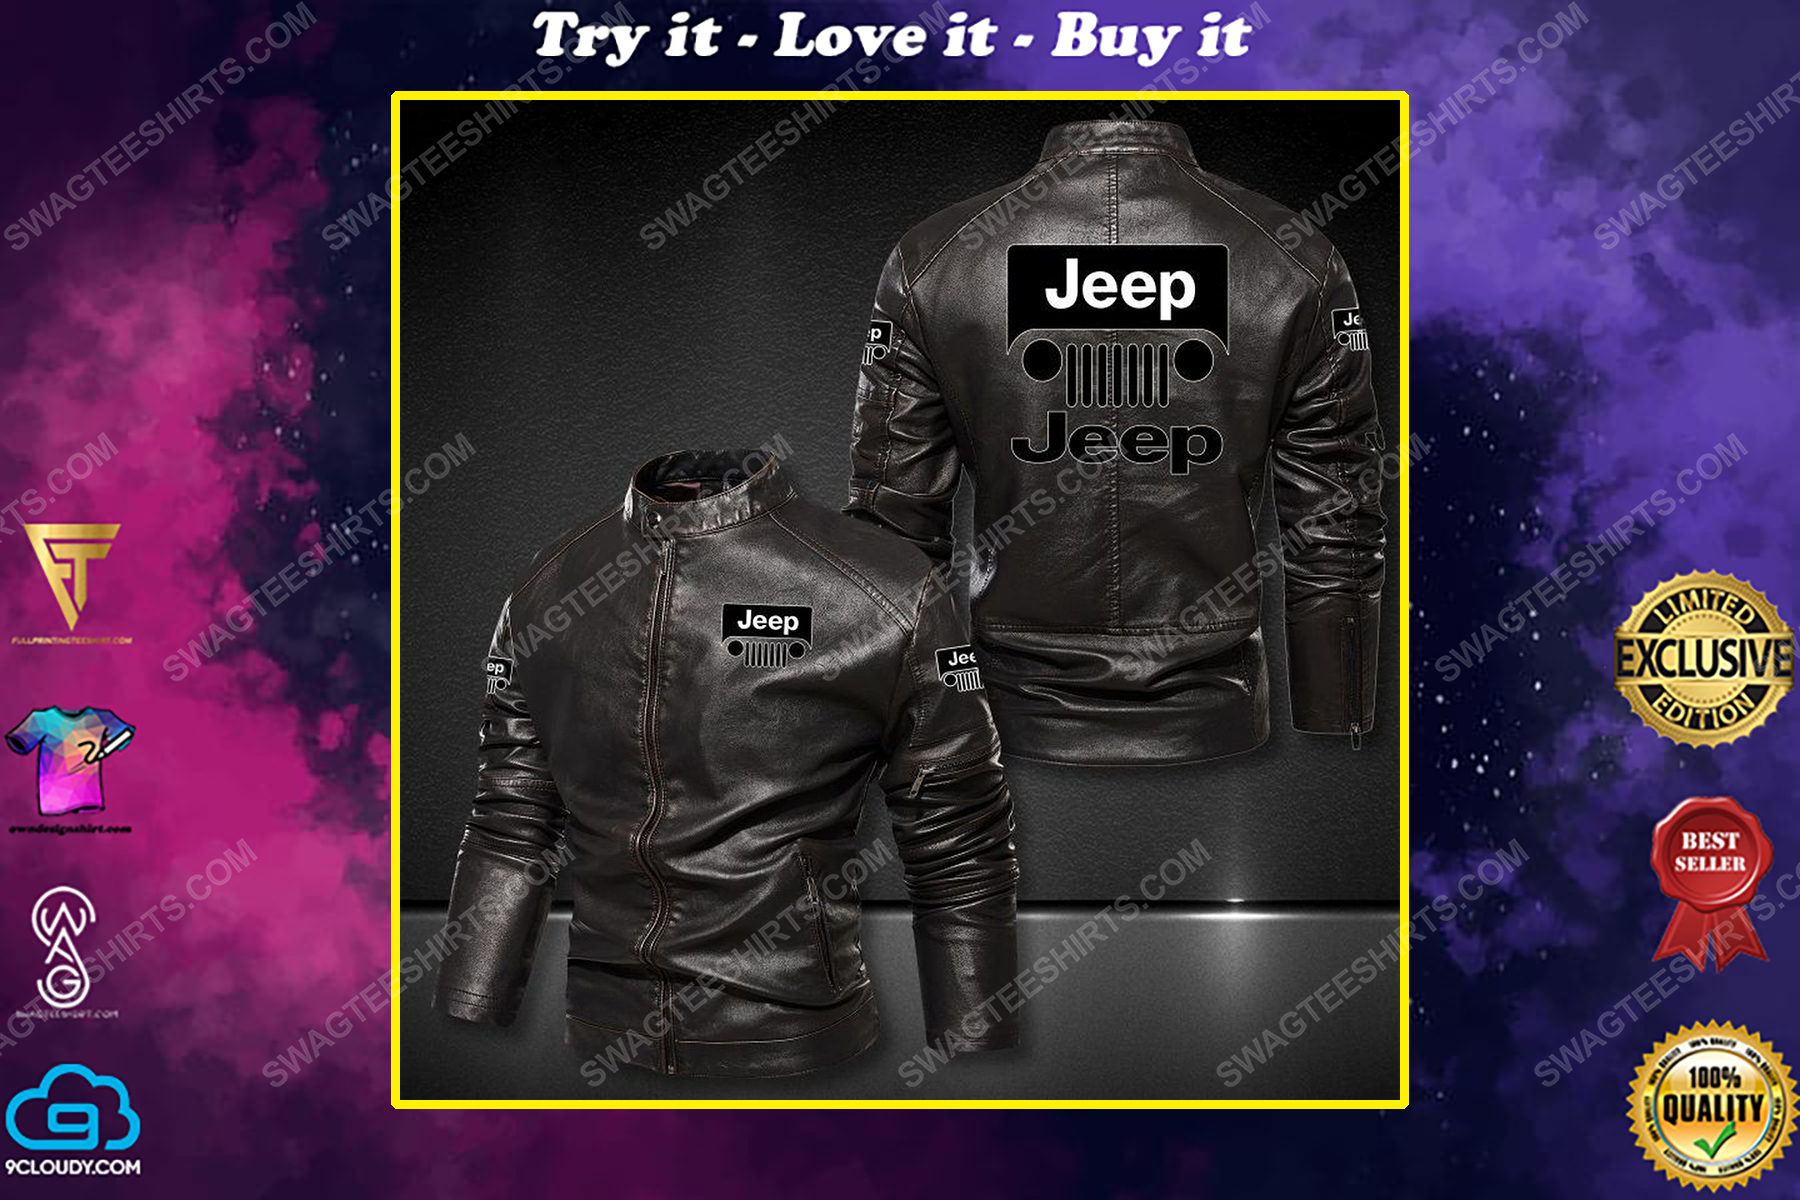 Jeep racing car leather jacket